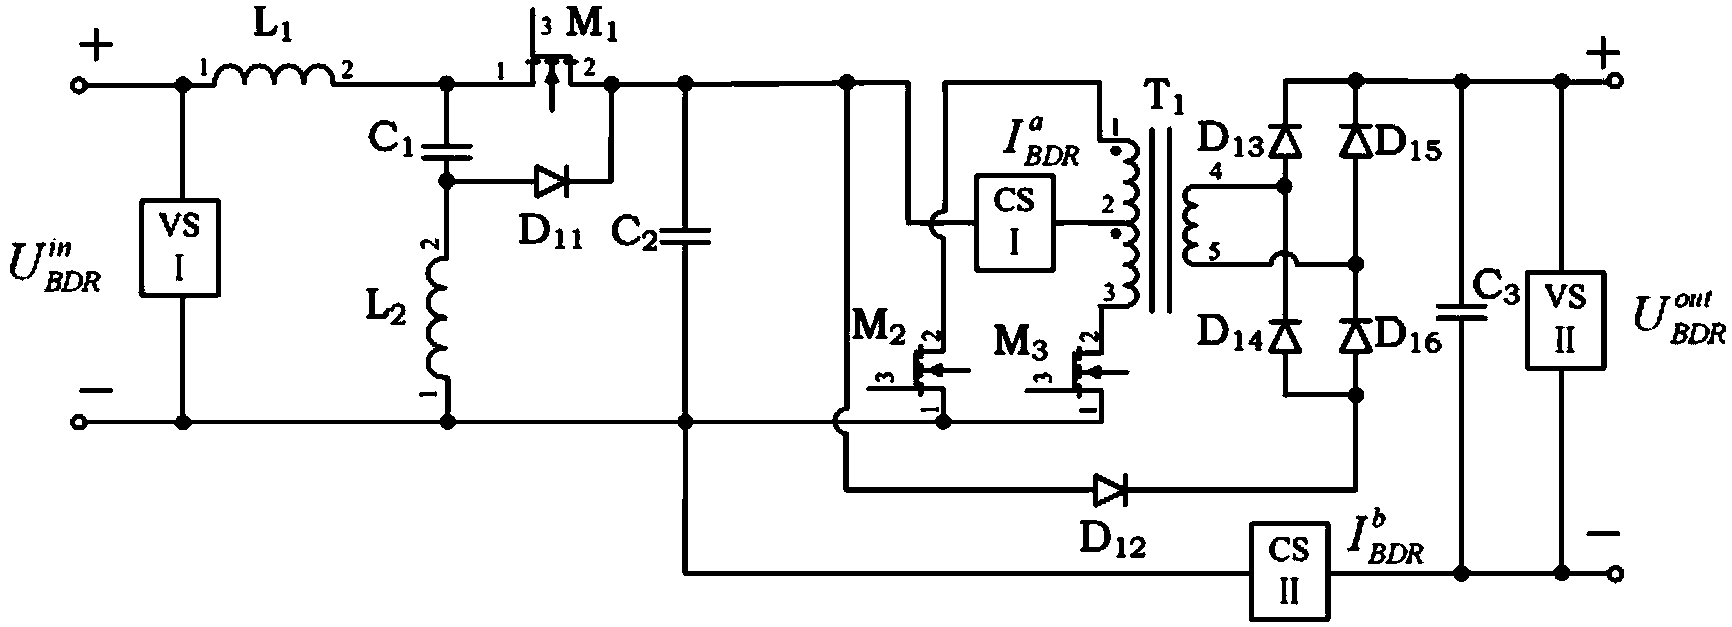 Wide-voltage-input efficient direct-current power converter for aerostat